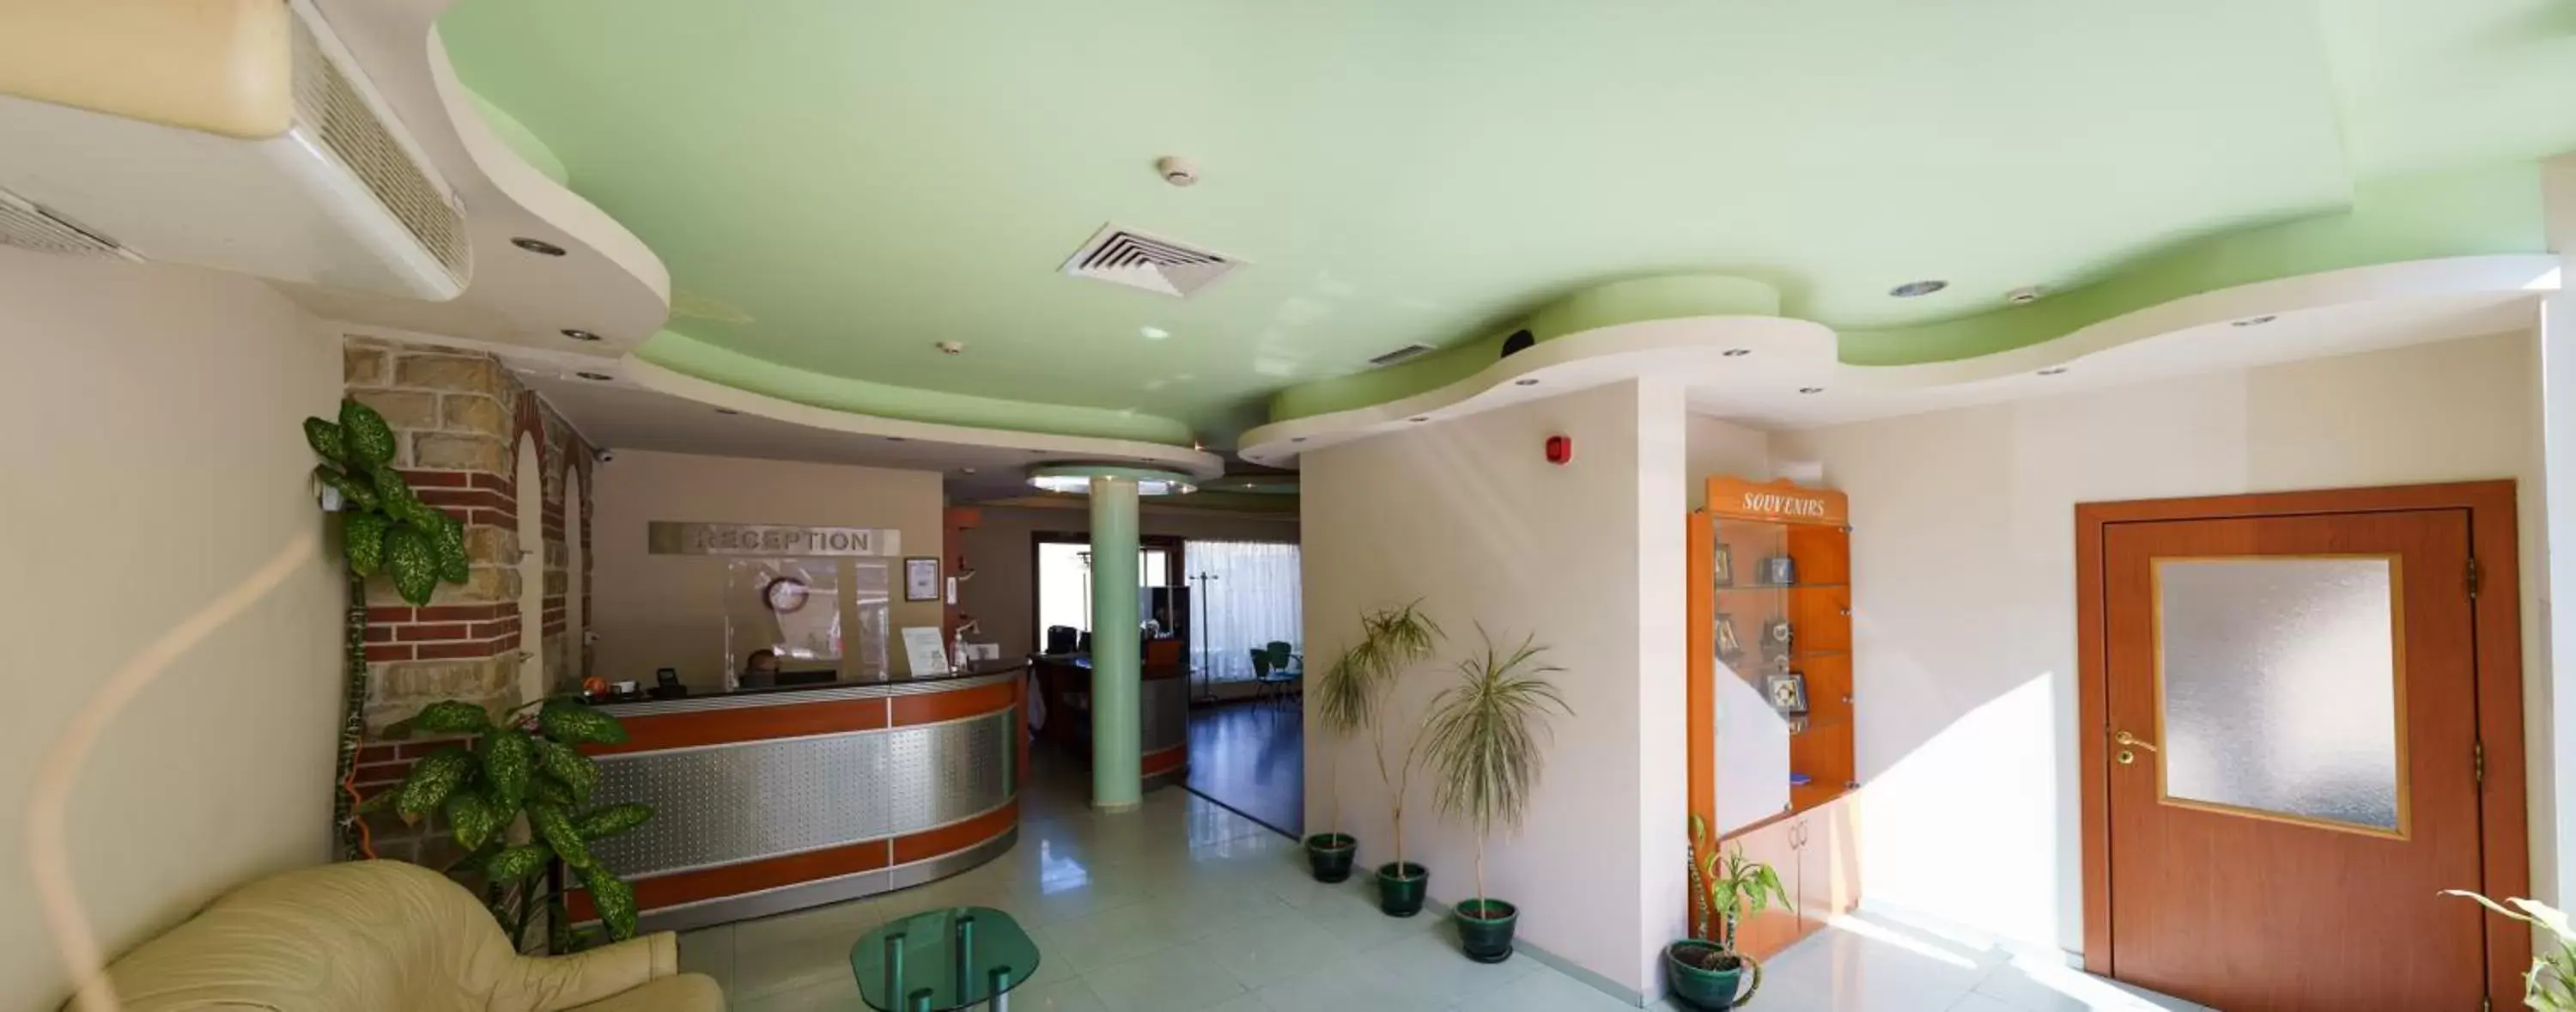 Lobby or reception, Lobby/Reception in Dionis Hotel